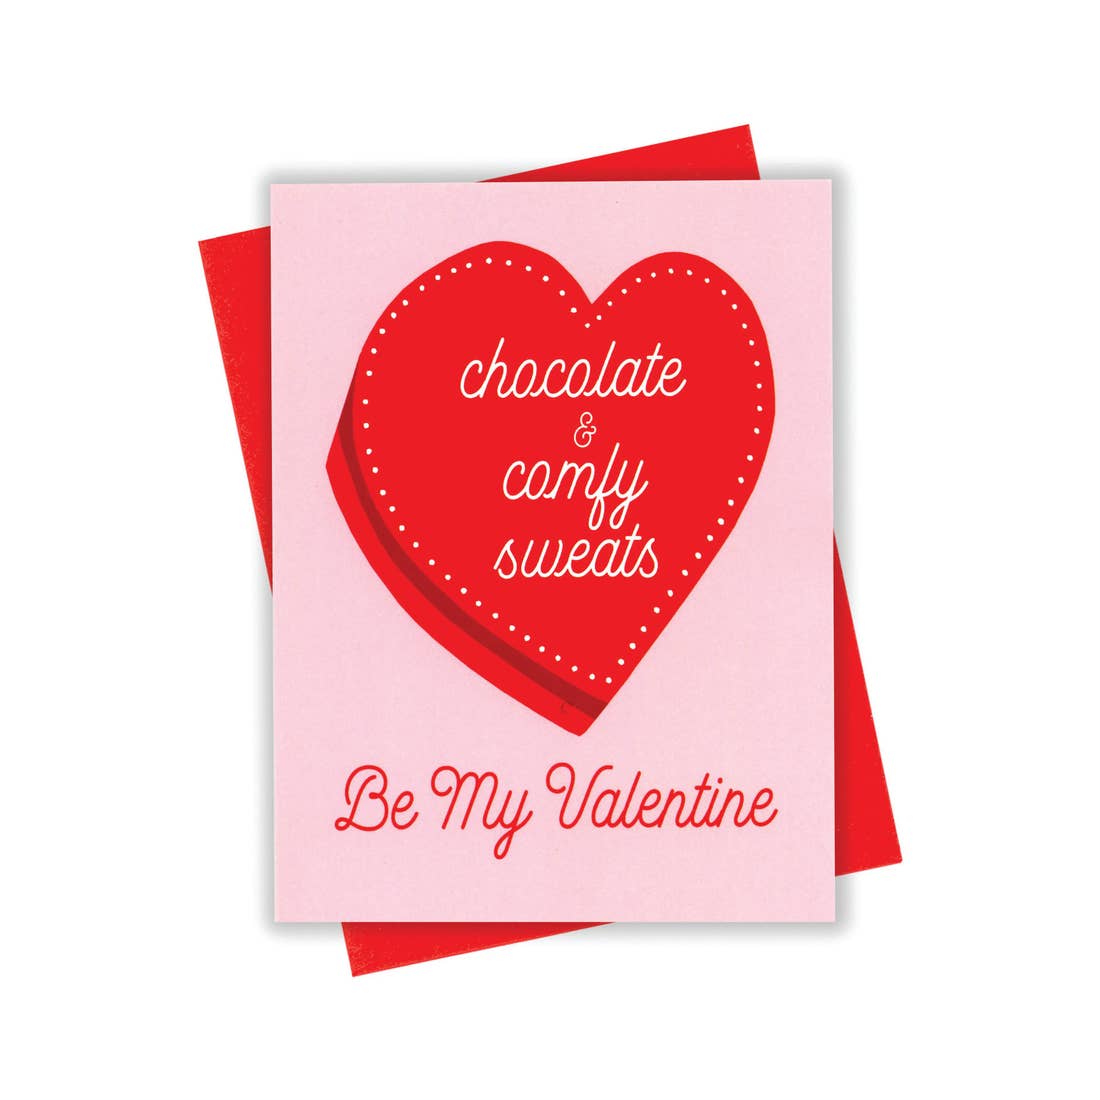 Chocolate and Comfy sweats Valentine Card